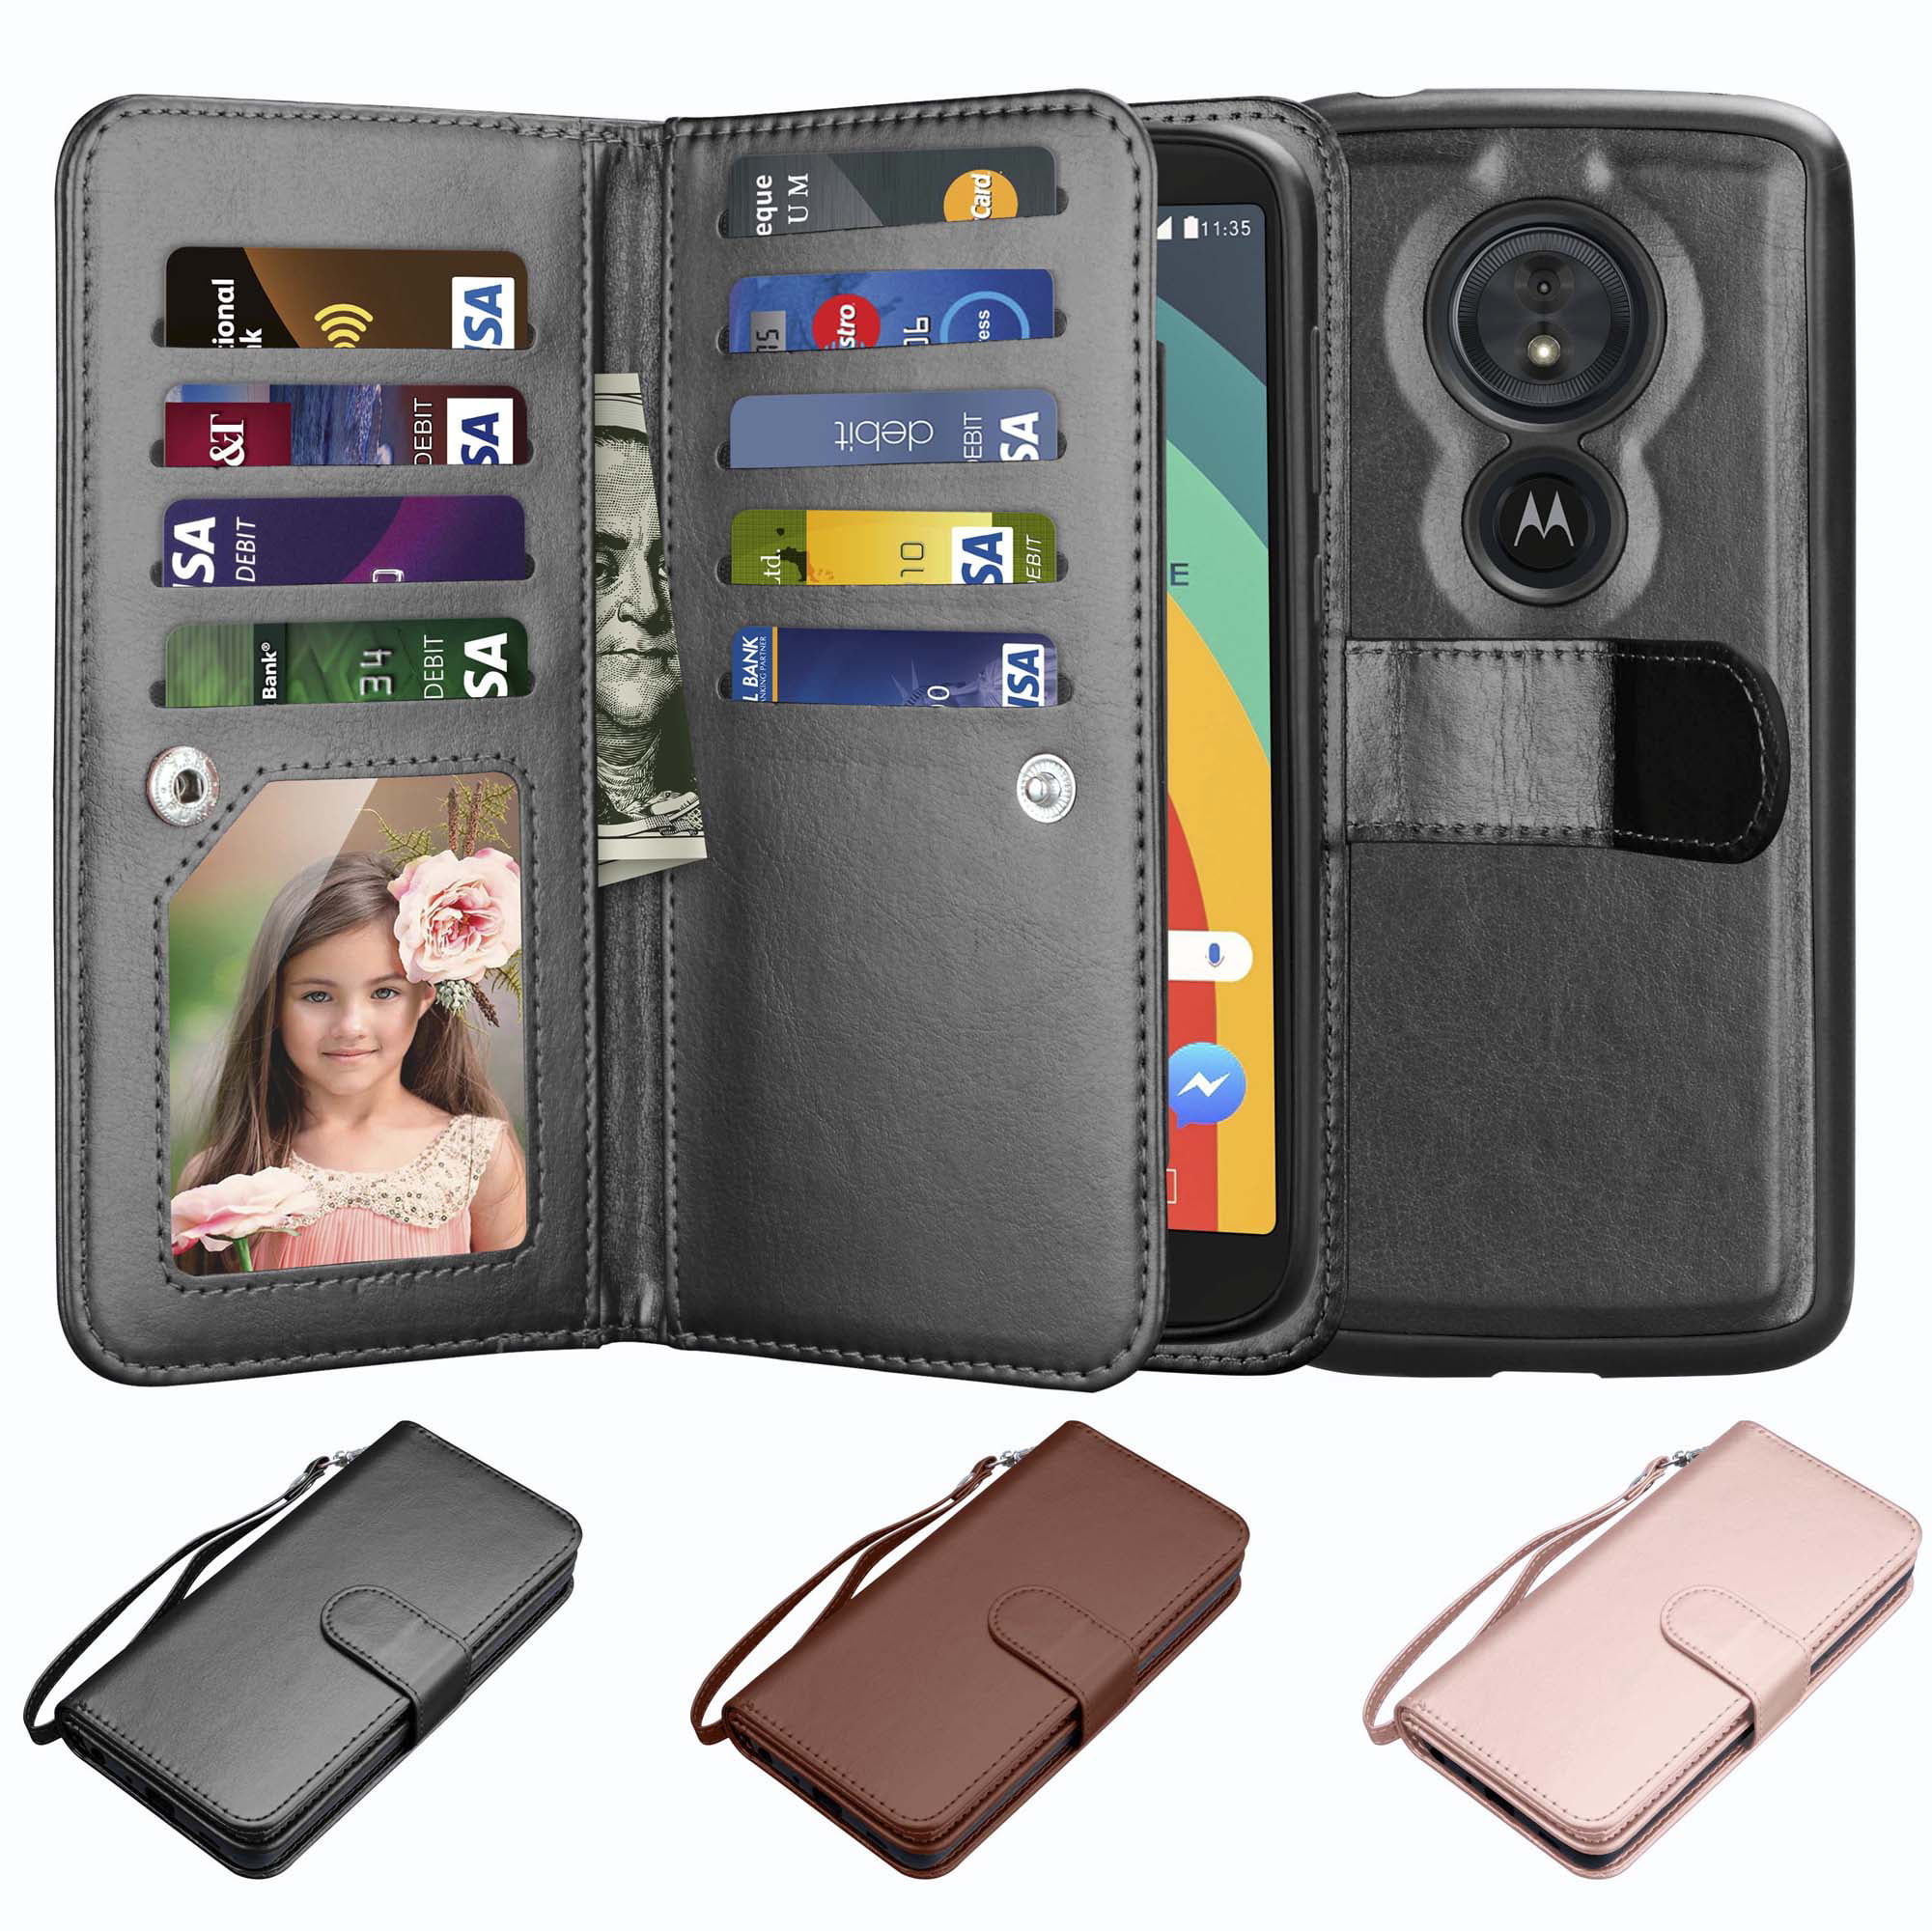 Njjex Case Motorola Moto G6 Play / Moto G6 Forge [Wrist Strap] Luxury ...